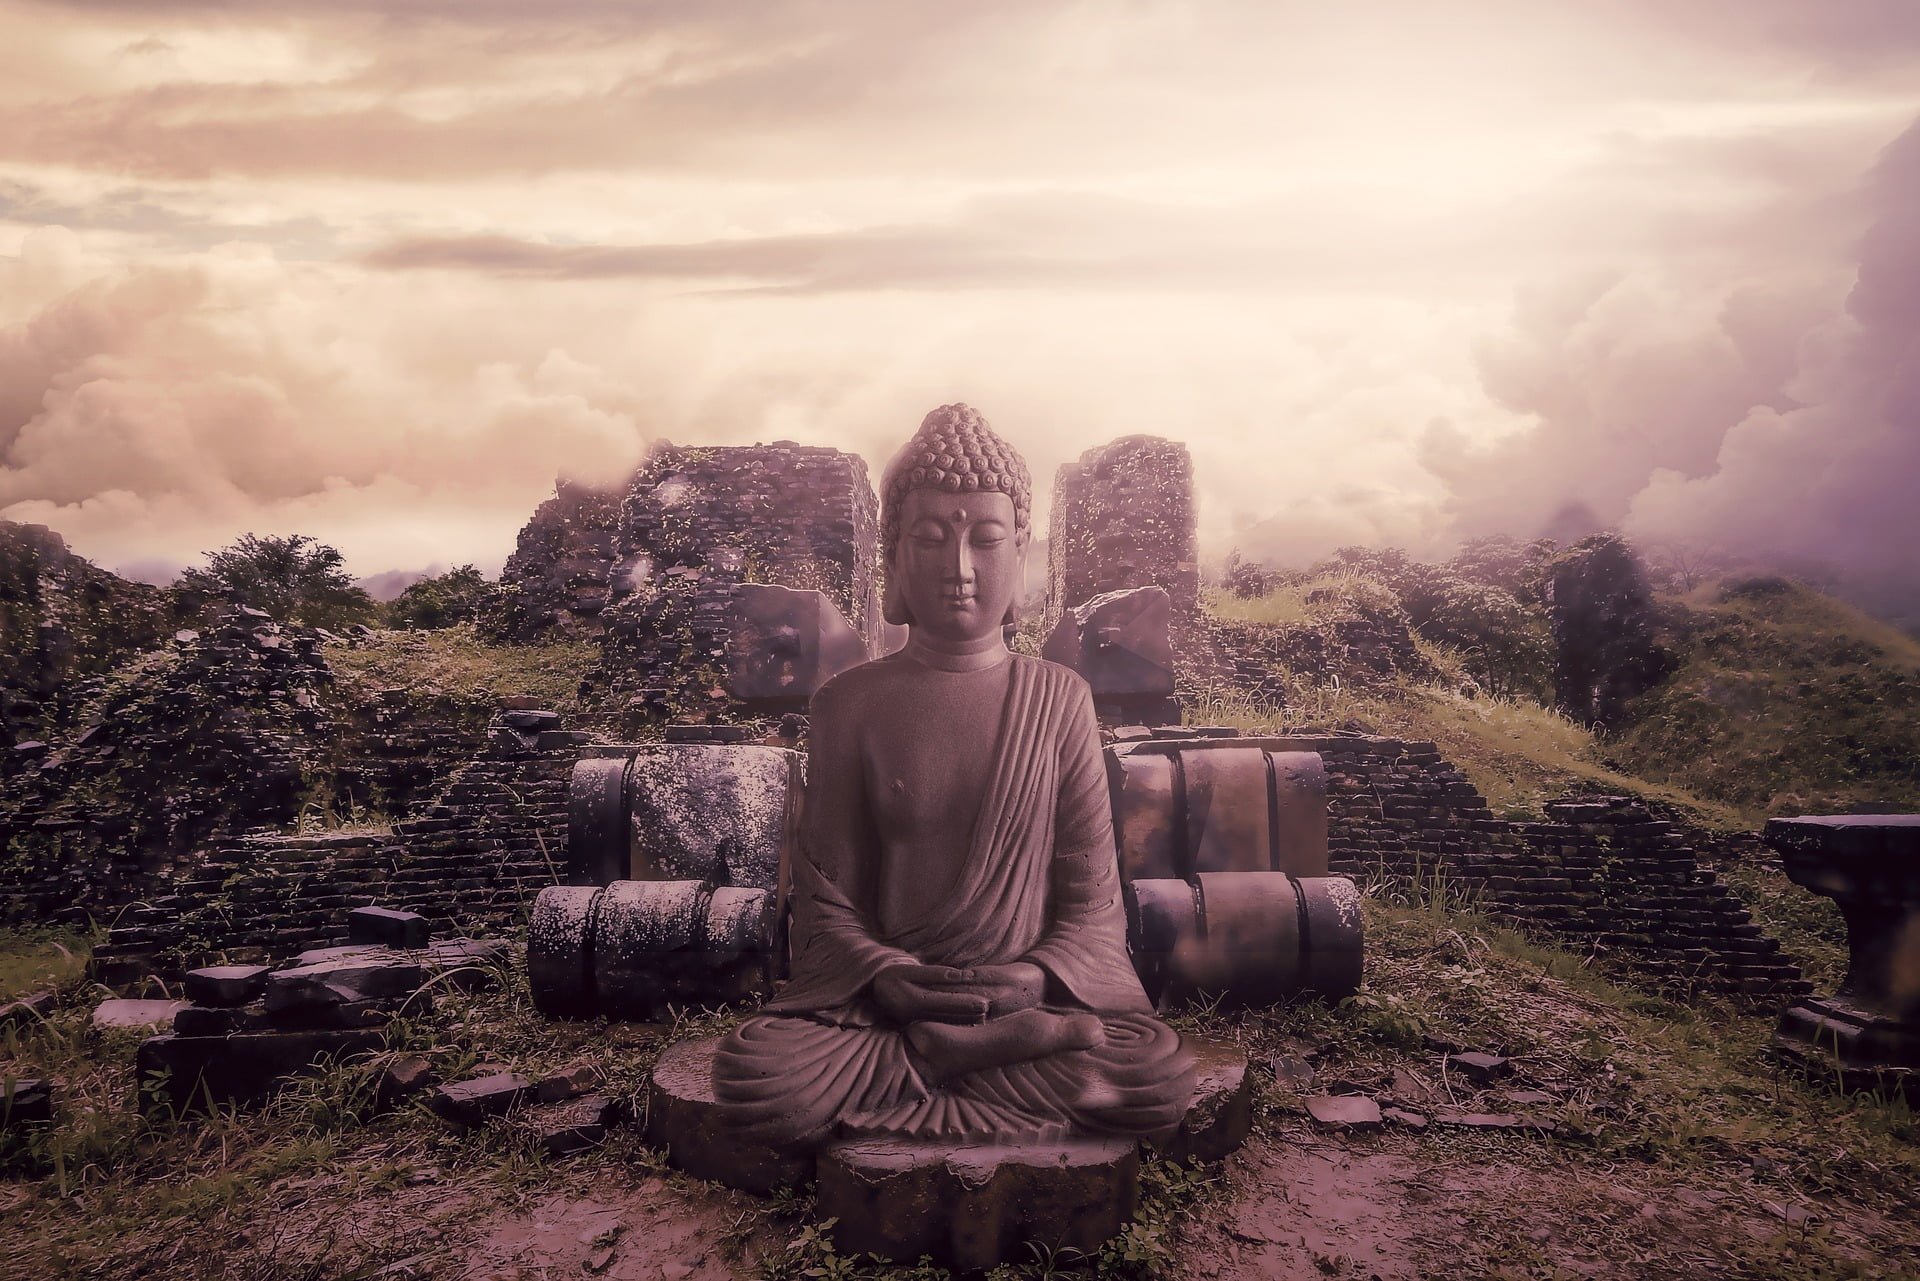 Boeddha zit in landschap